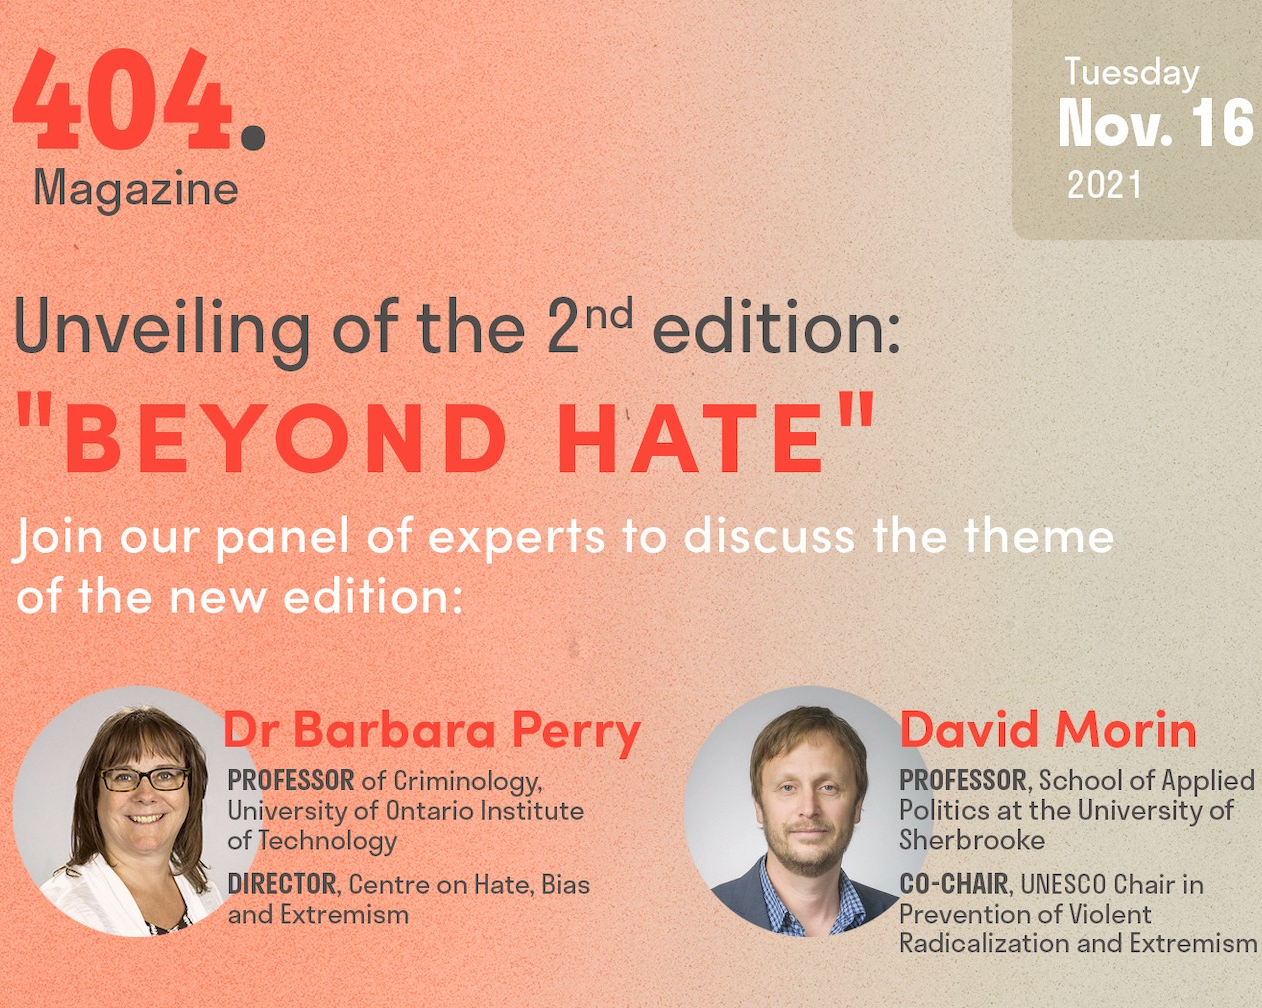 David Morin to participate in 404 magazine’s second issue launch